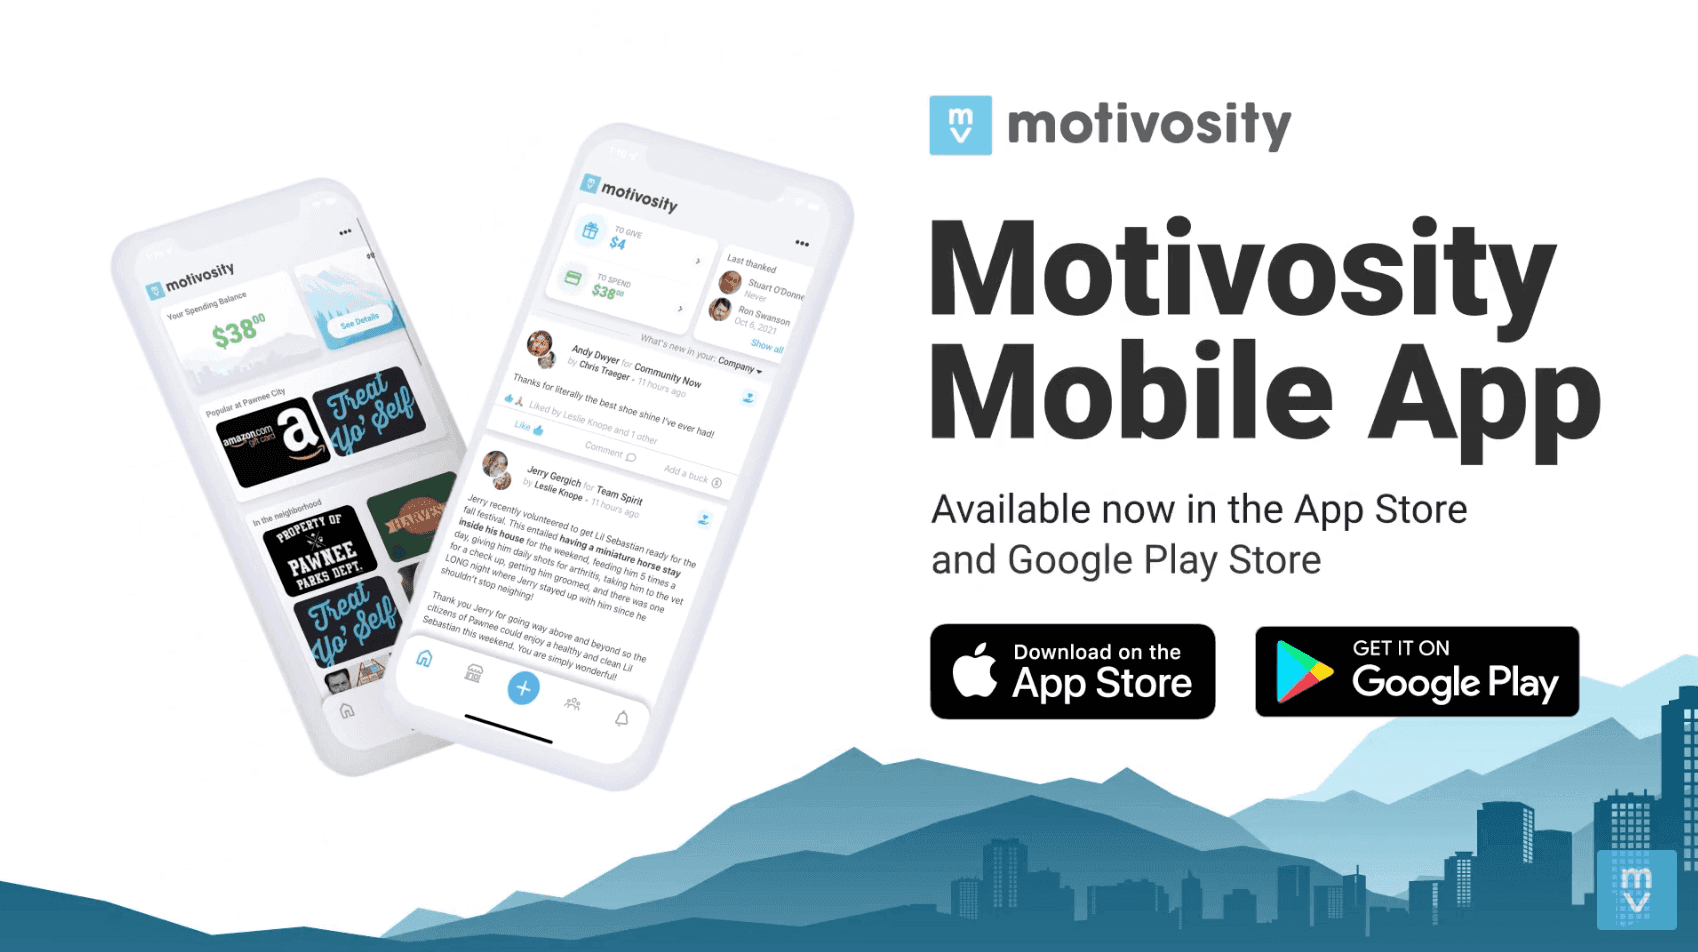 Video: Motivosity Mobile App